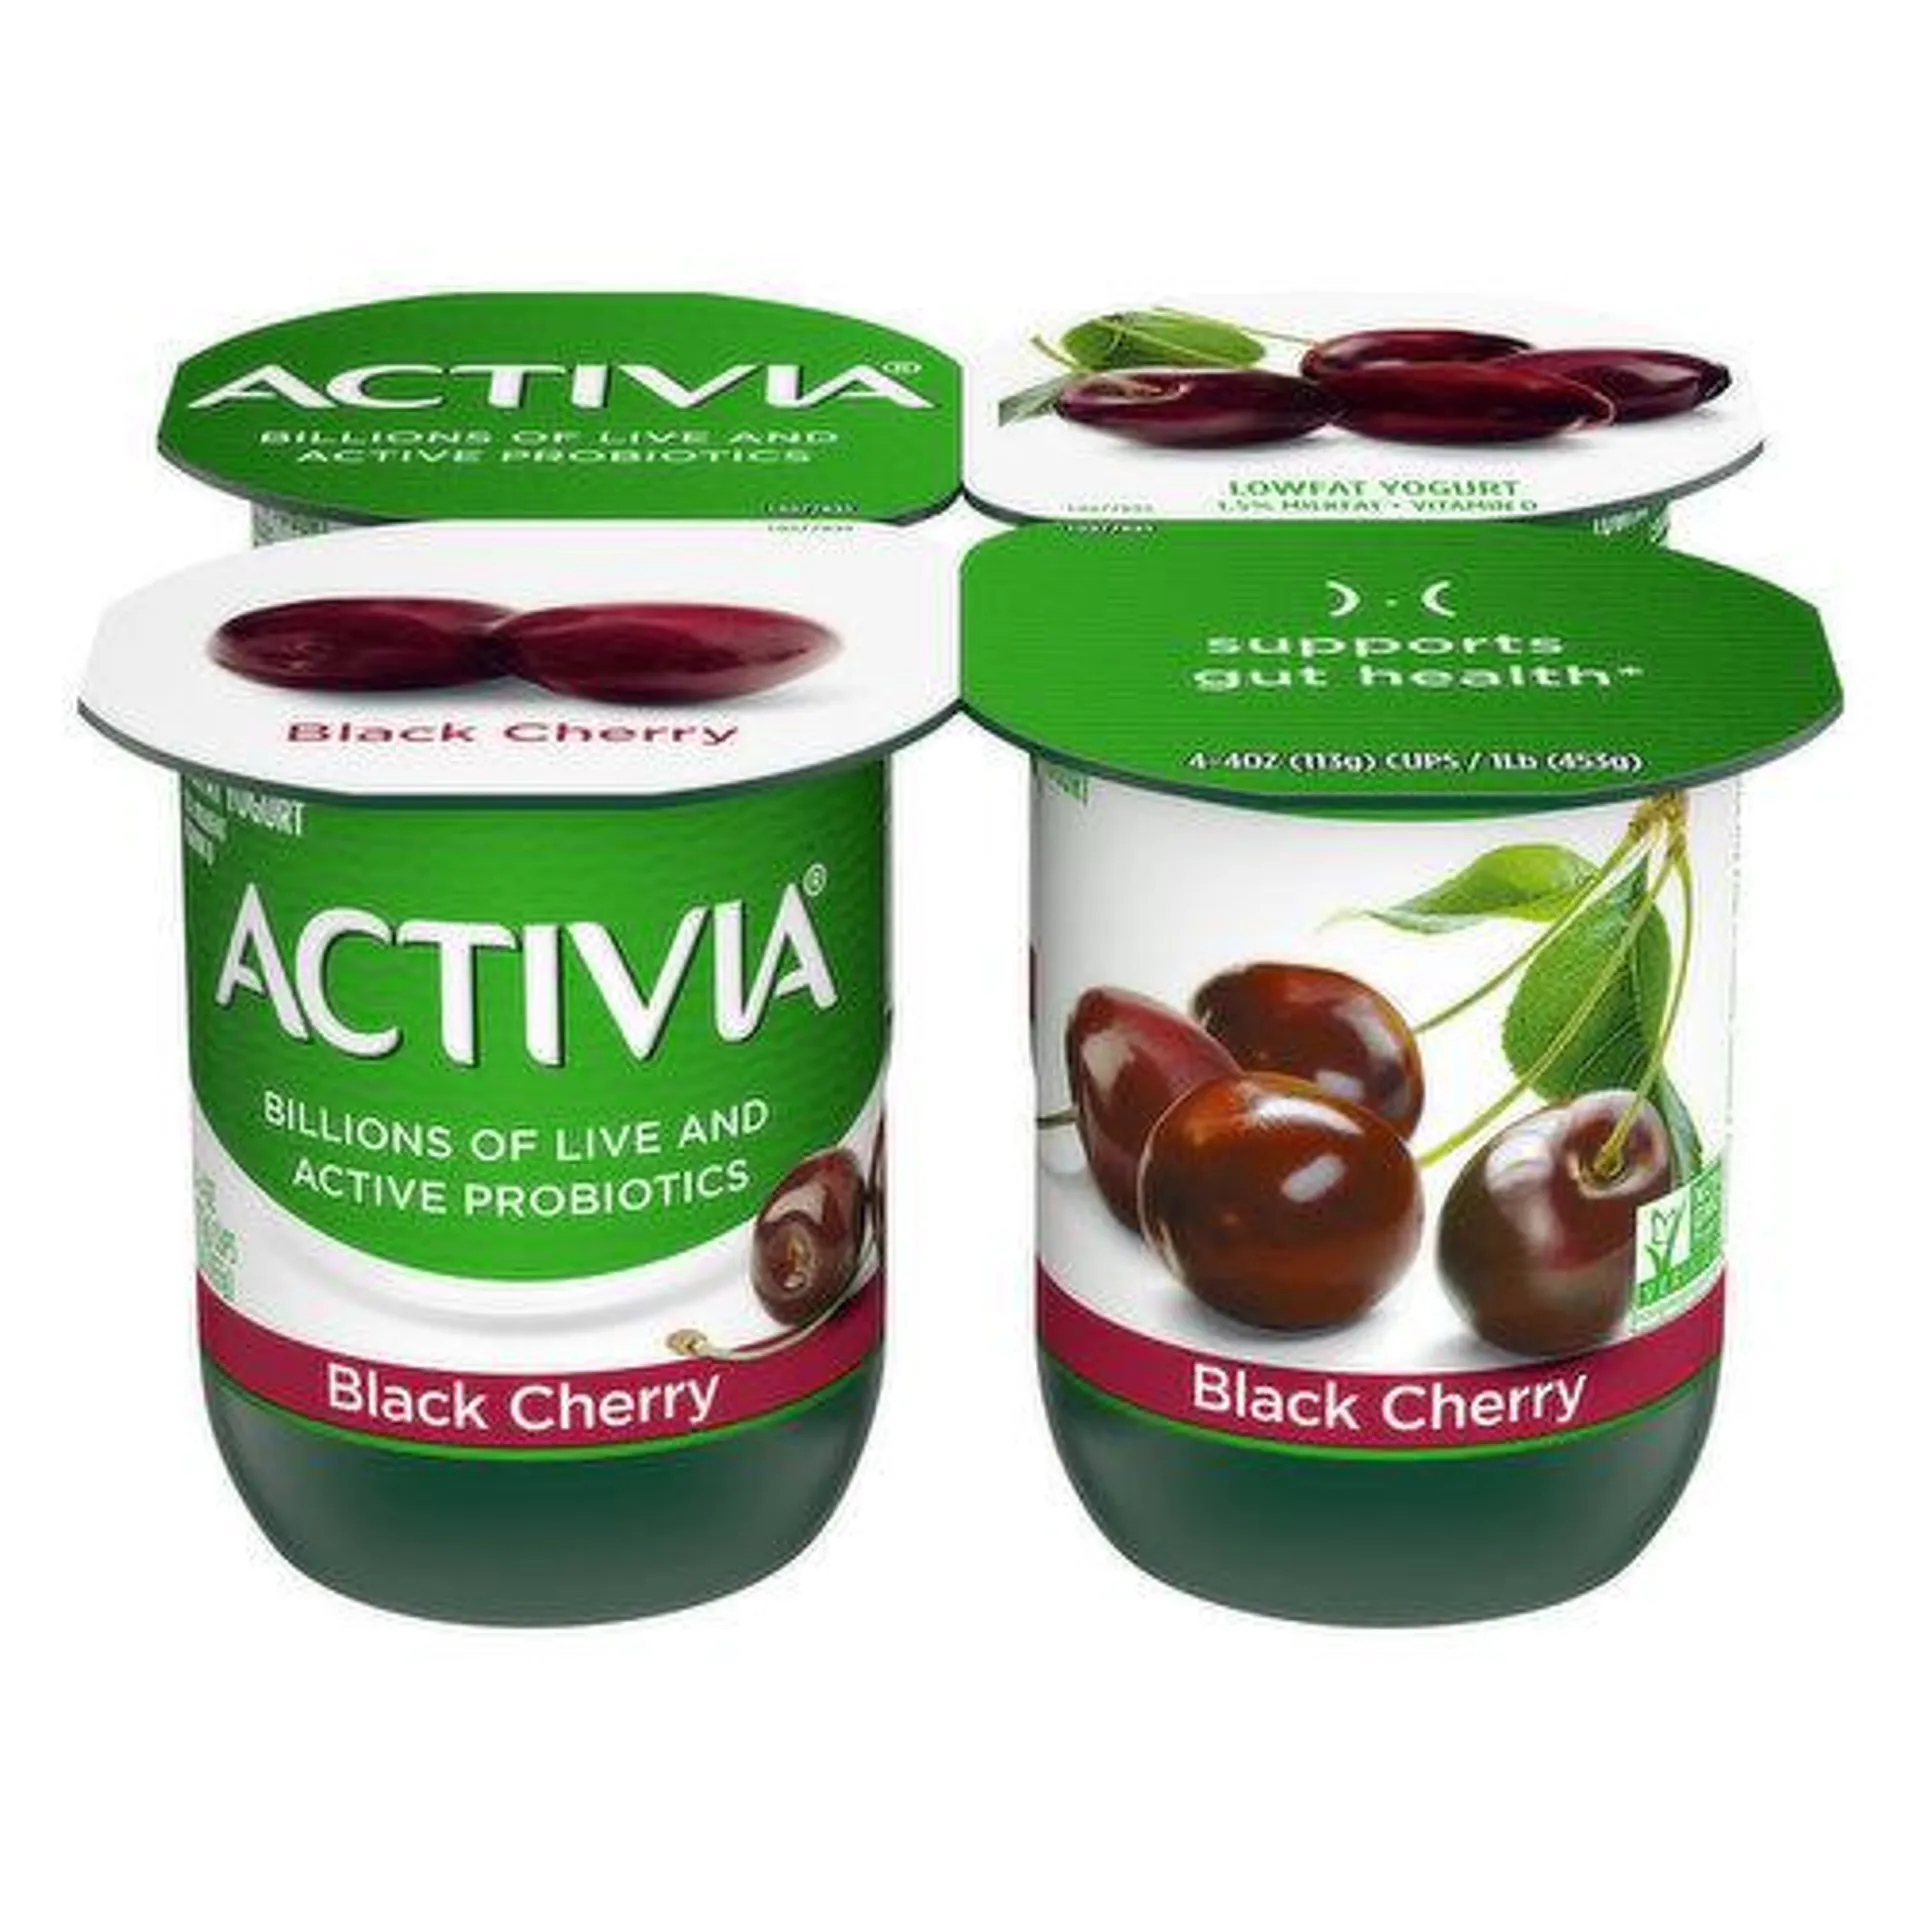 Activia Blended Black Cherry Lowfat Probiotic Yogurt - 16 Ounce